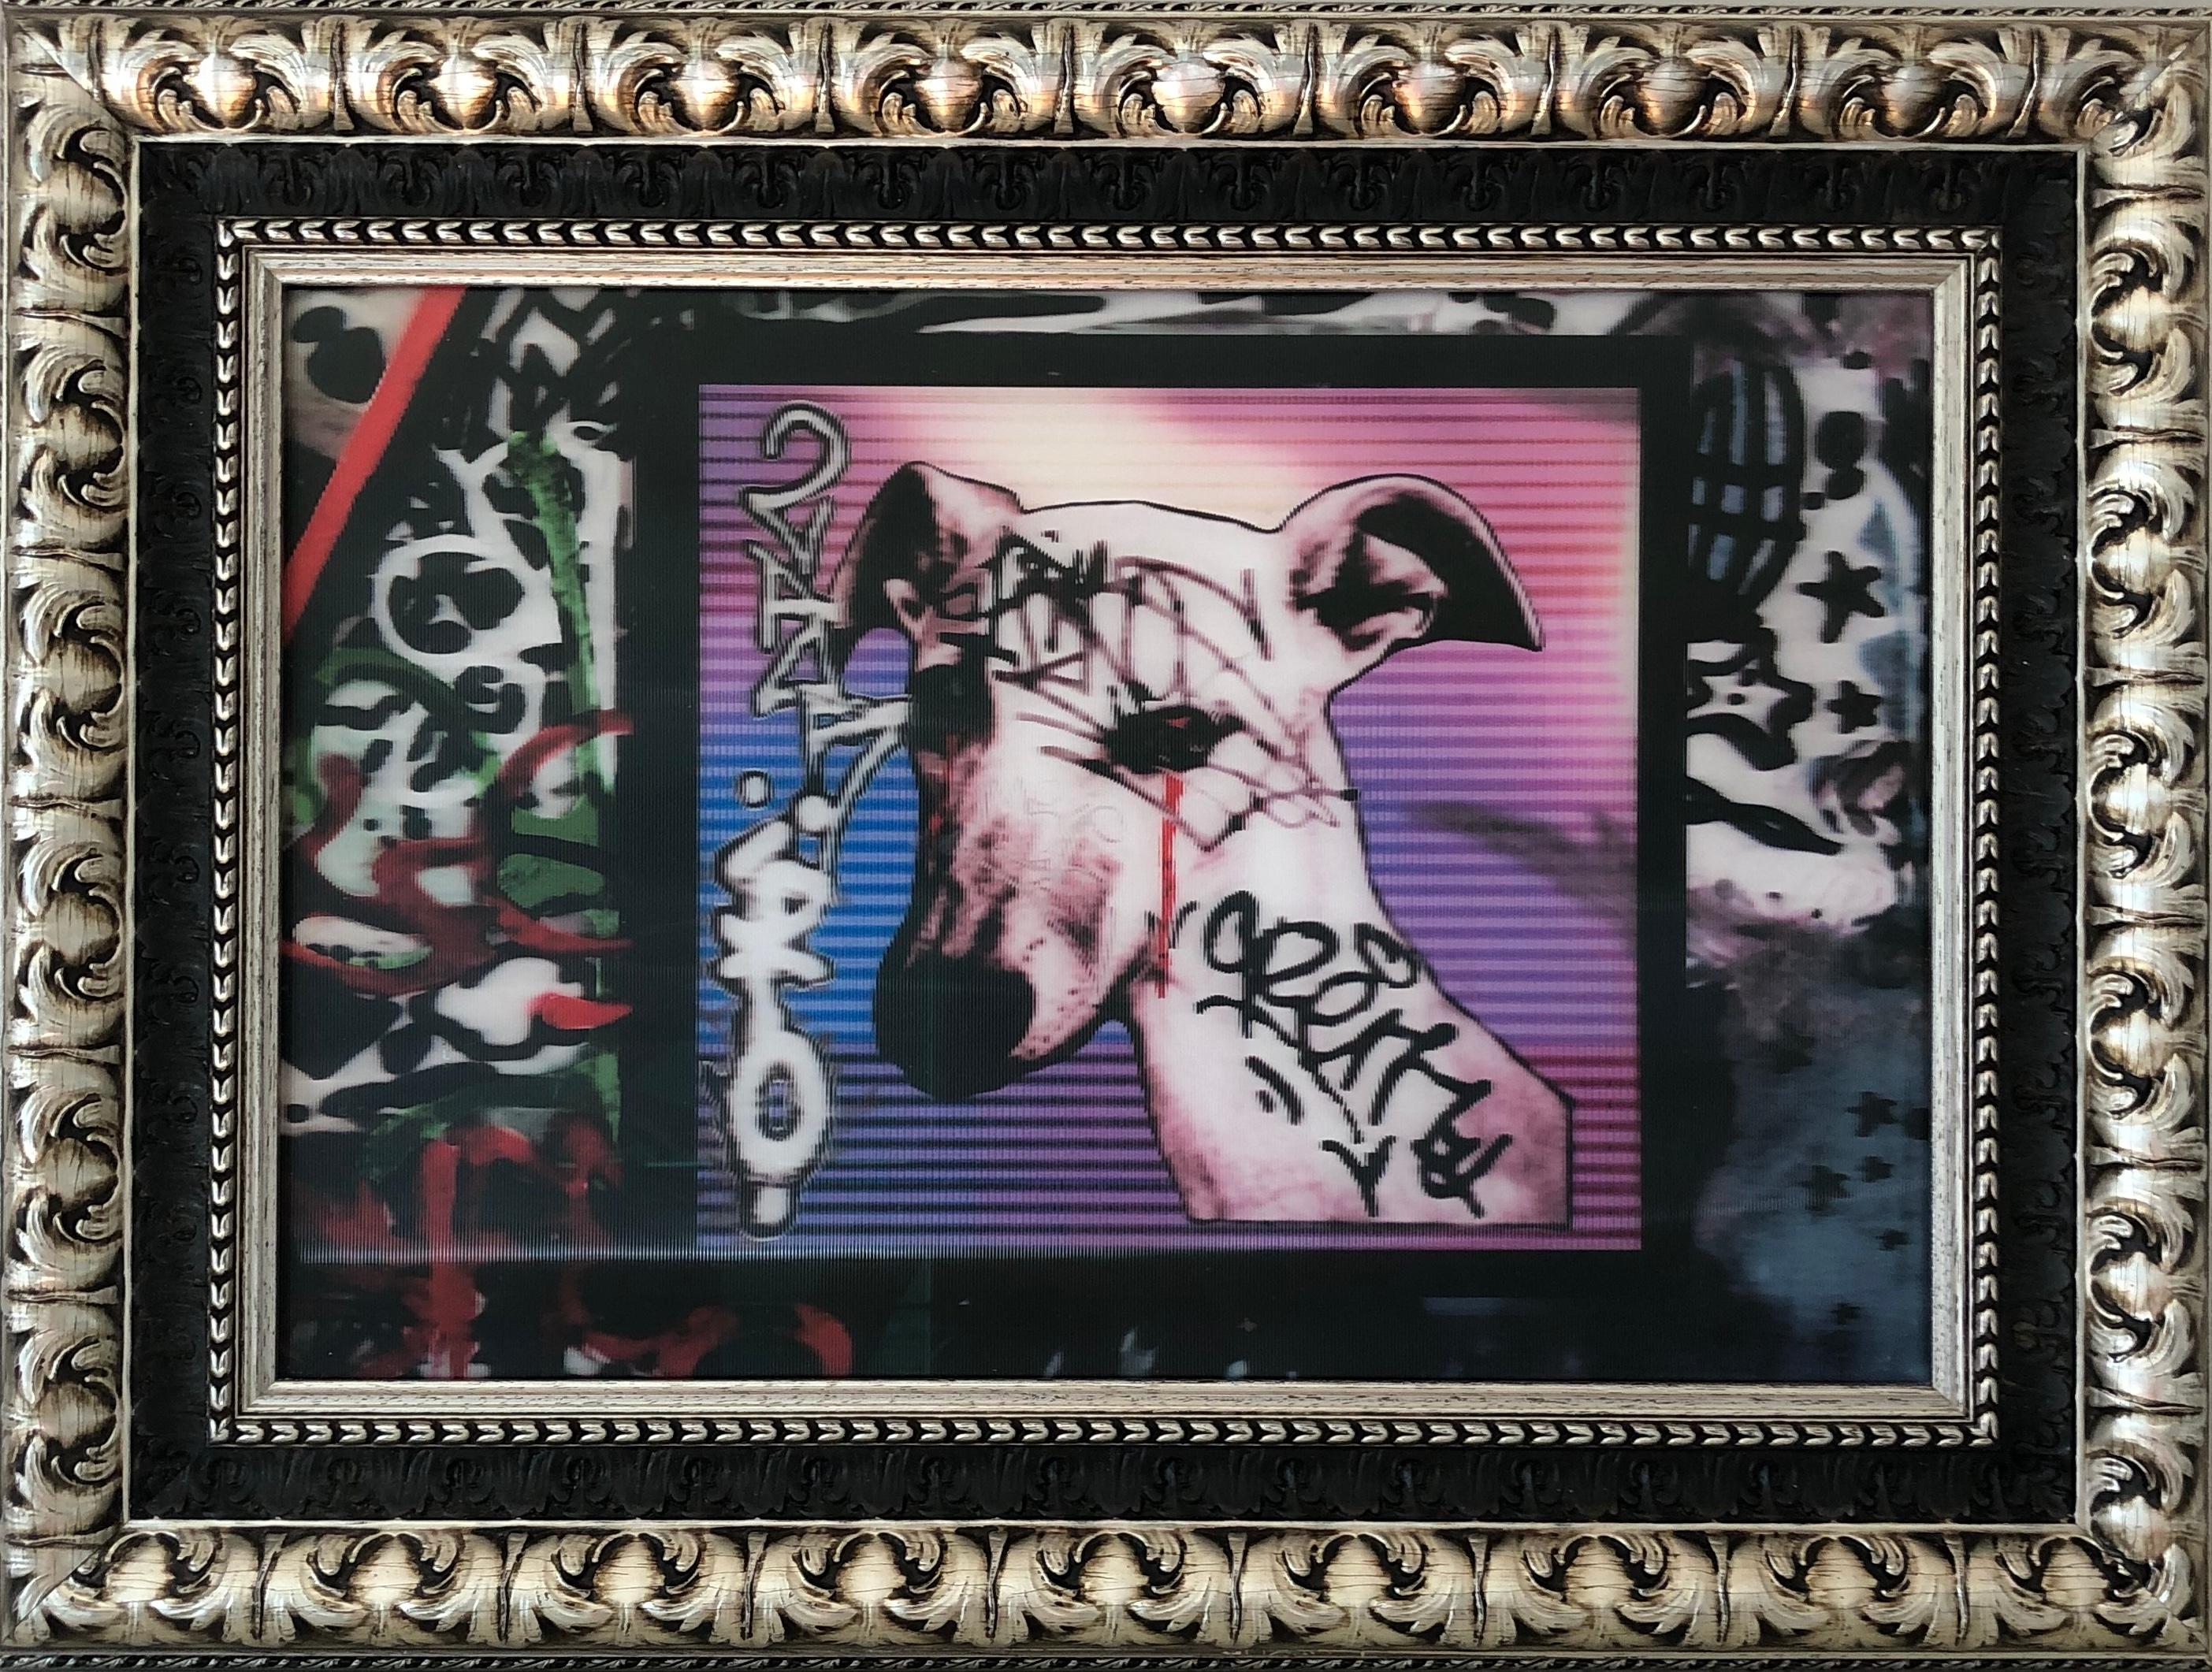 Le Chien de les Frigos - lenticular photo, graffiti in pink, red, white, blue, black - Mixed Media Art by Alec Malyshev